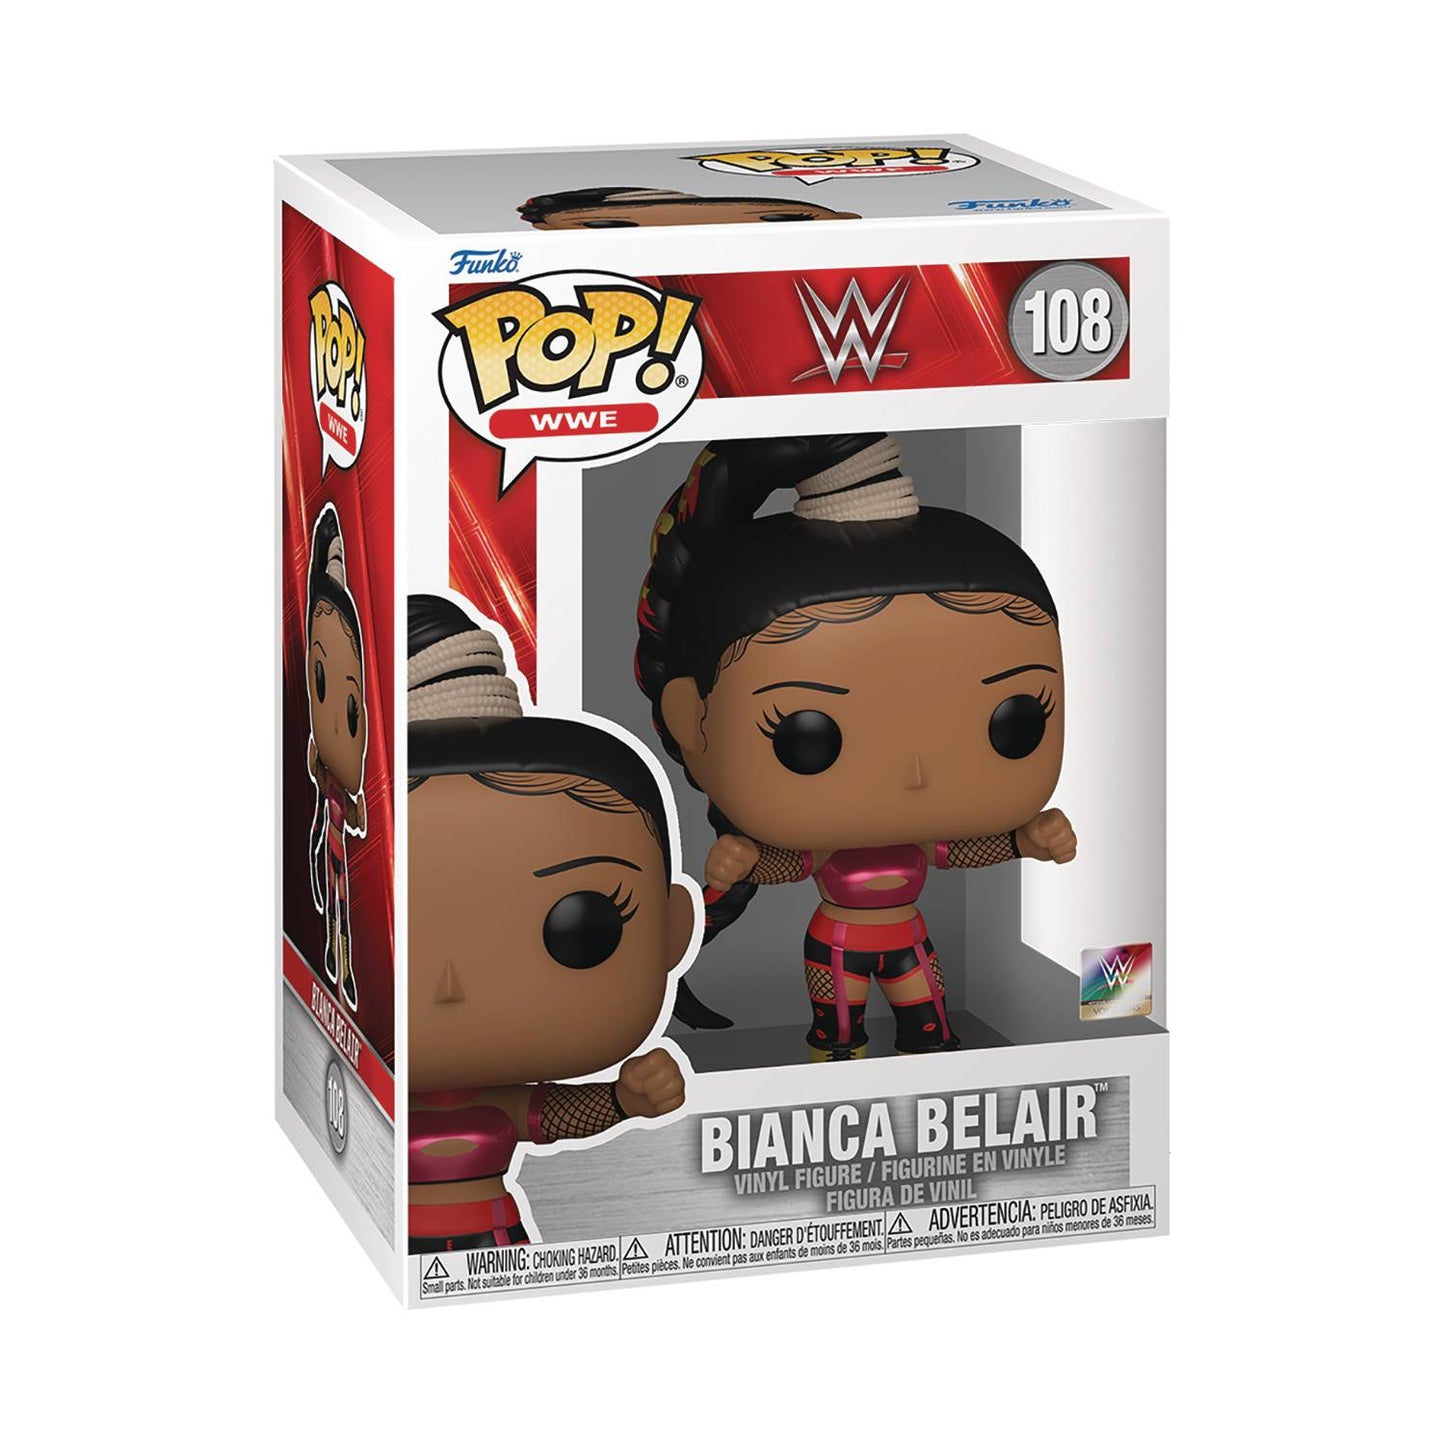 Bianca Belair 108 WWE